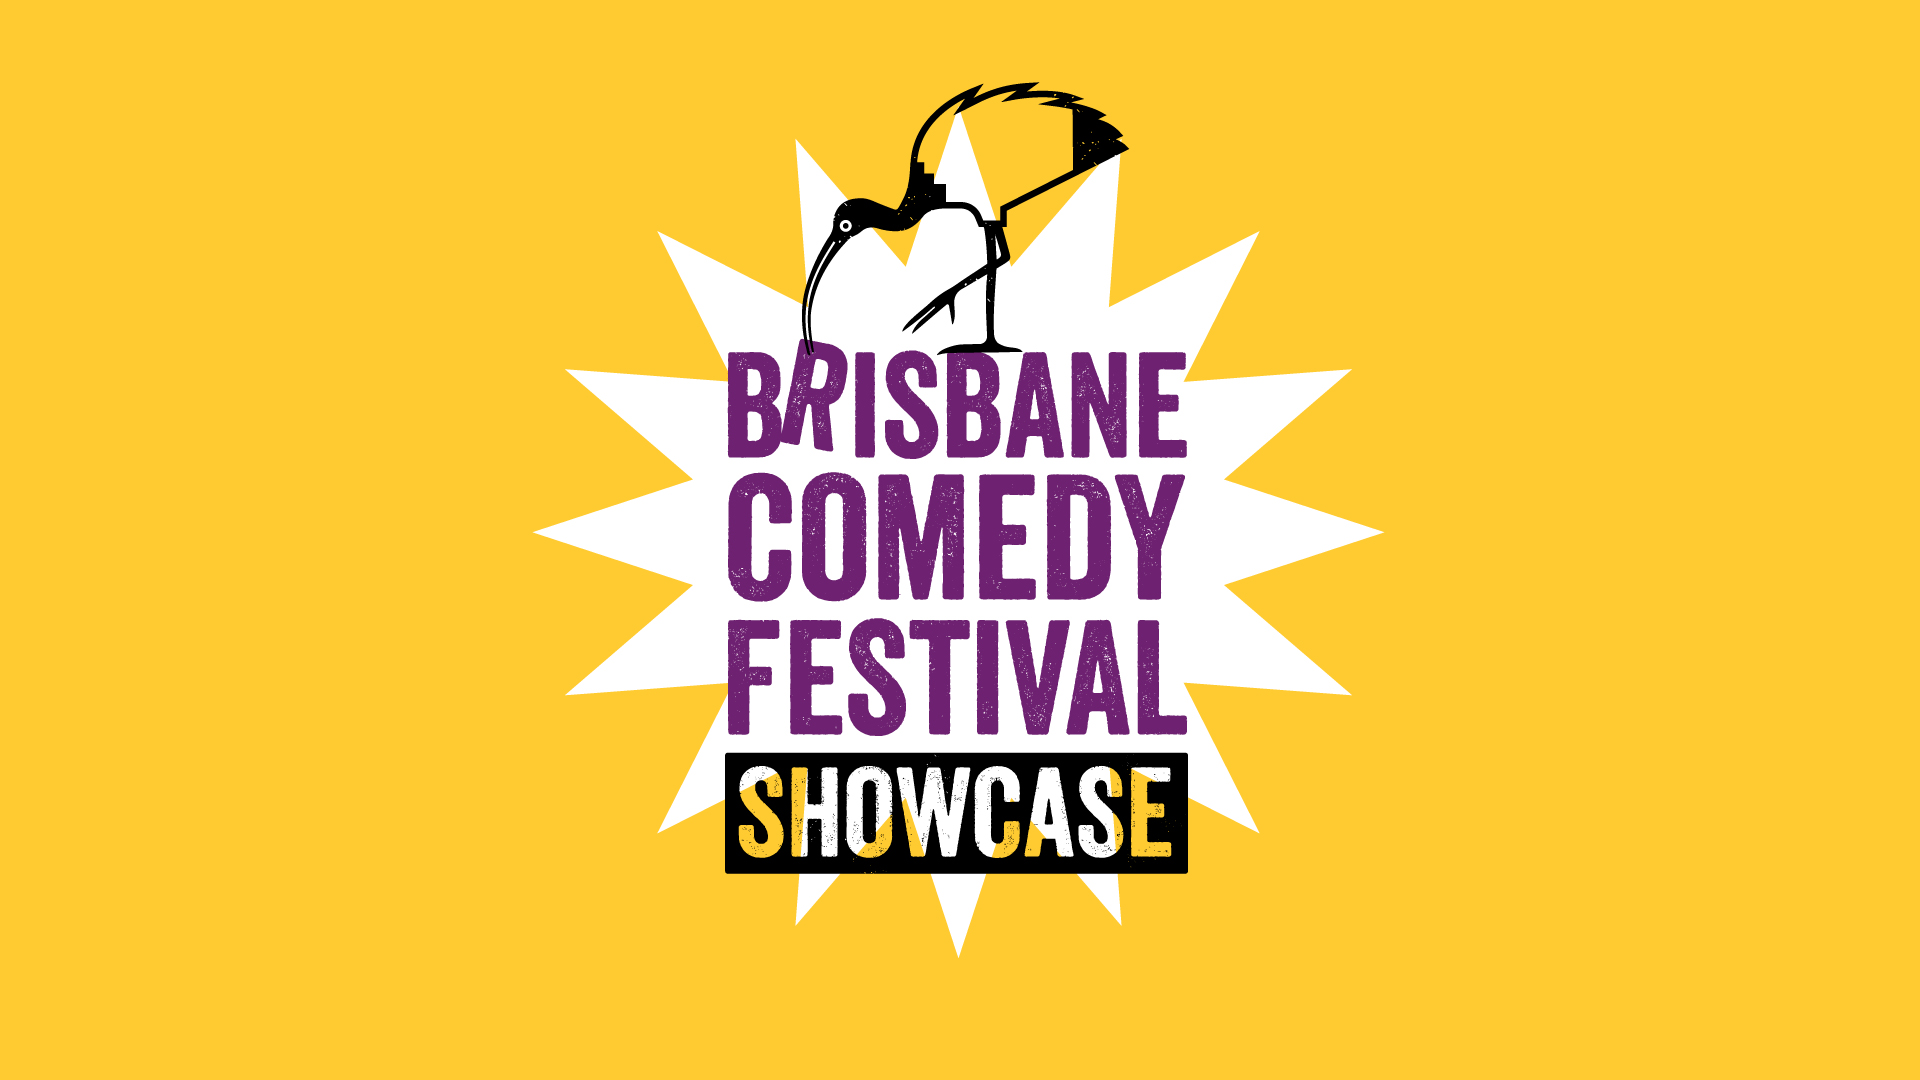 Brisbane Comedy Festival Showcase